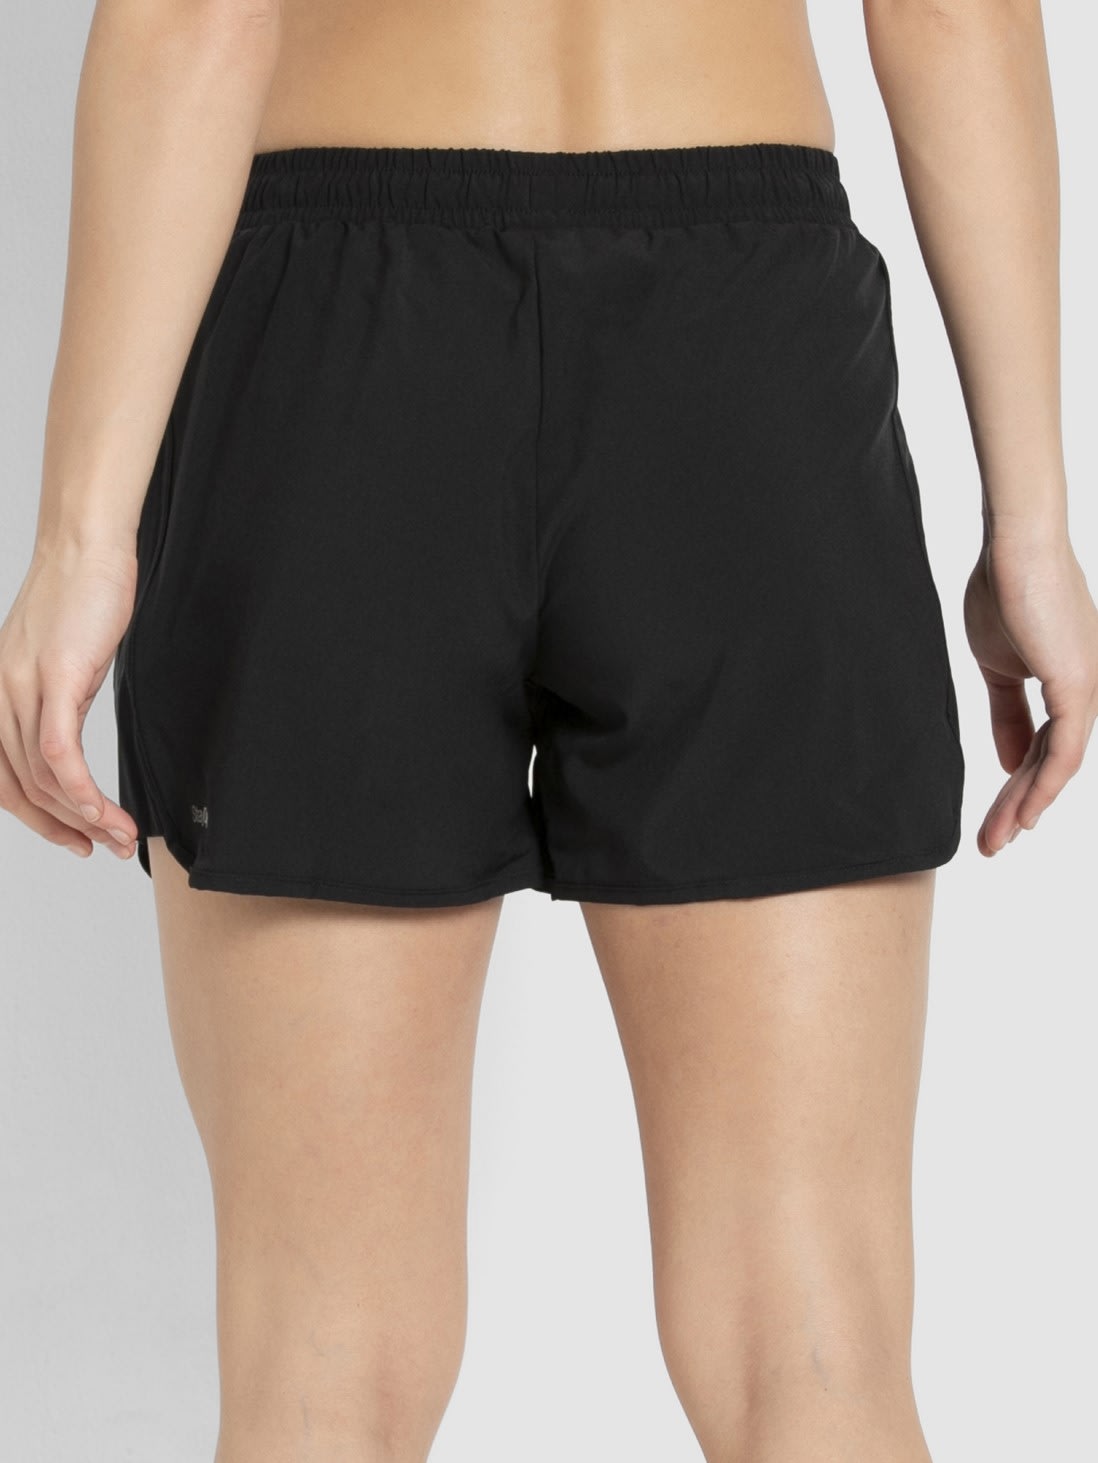 Jockey Women Apparel Bottoms | Black Shorts